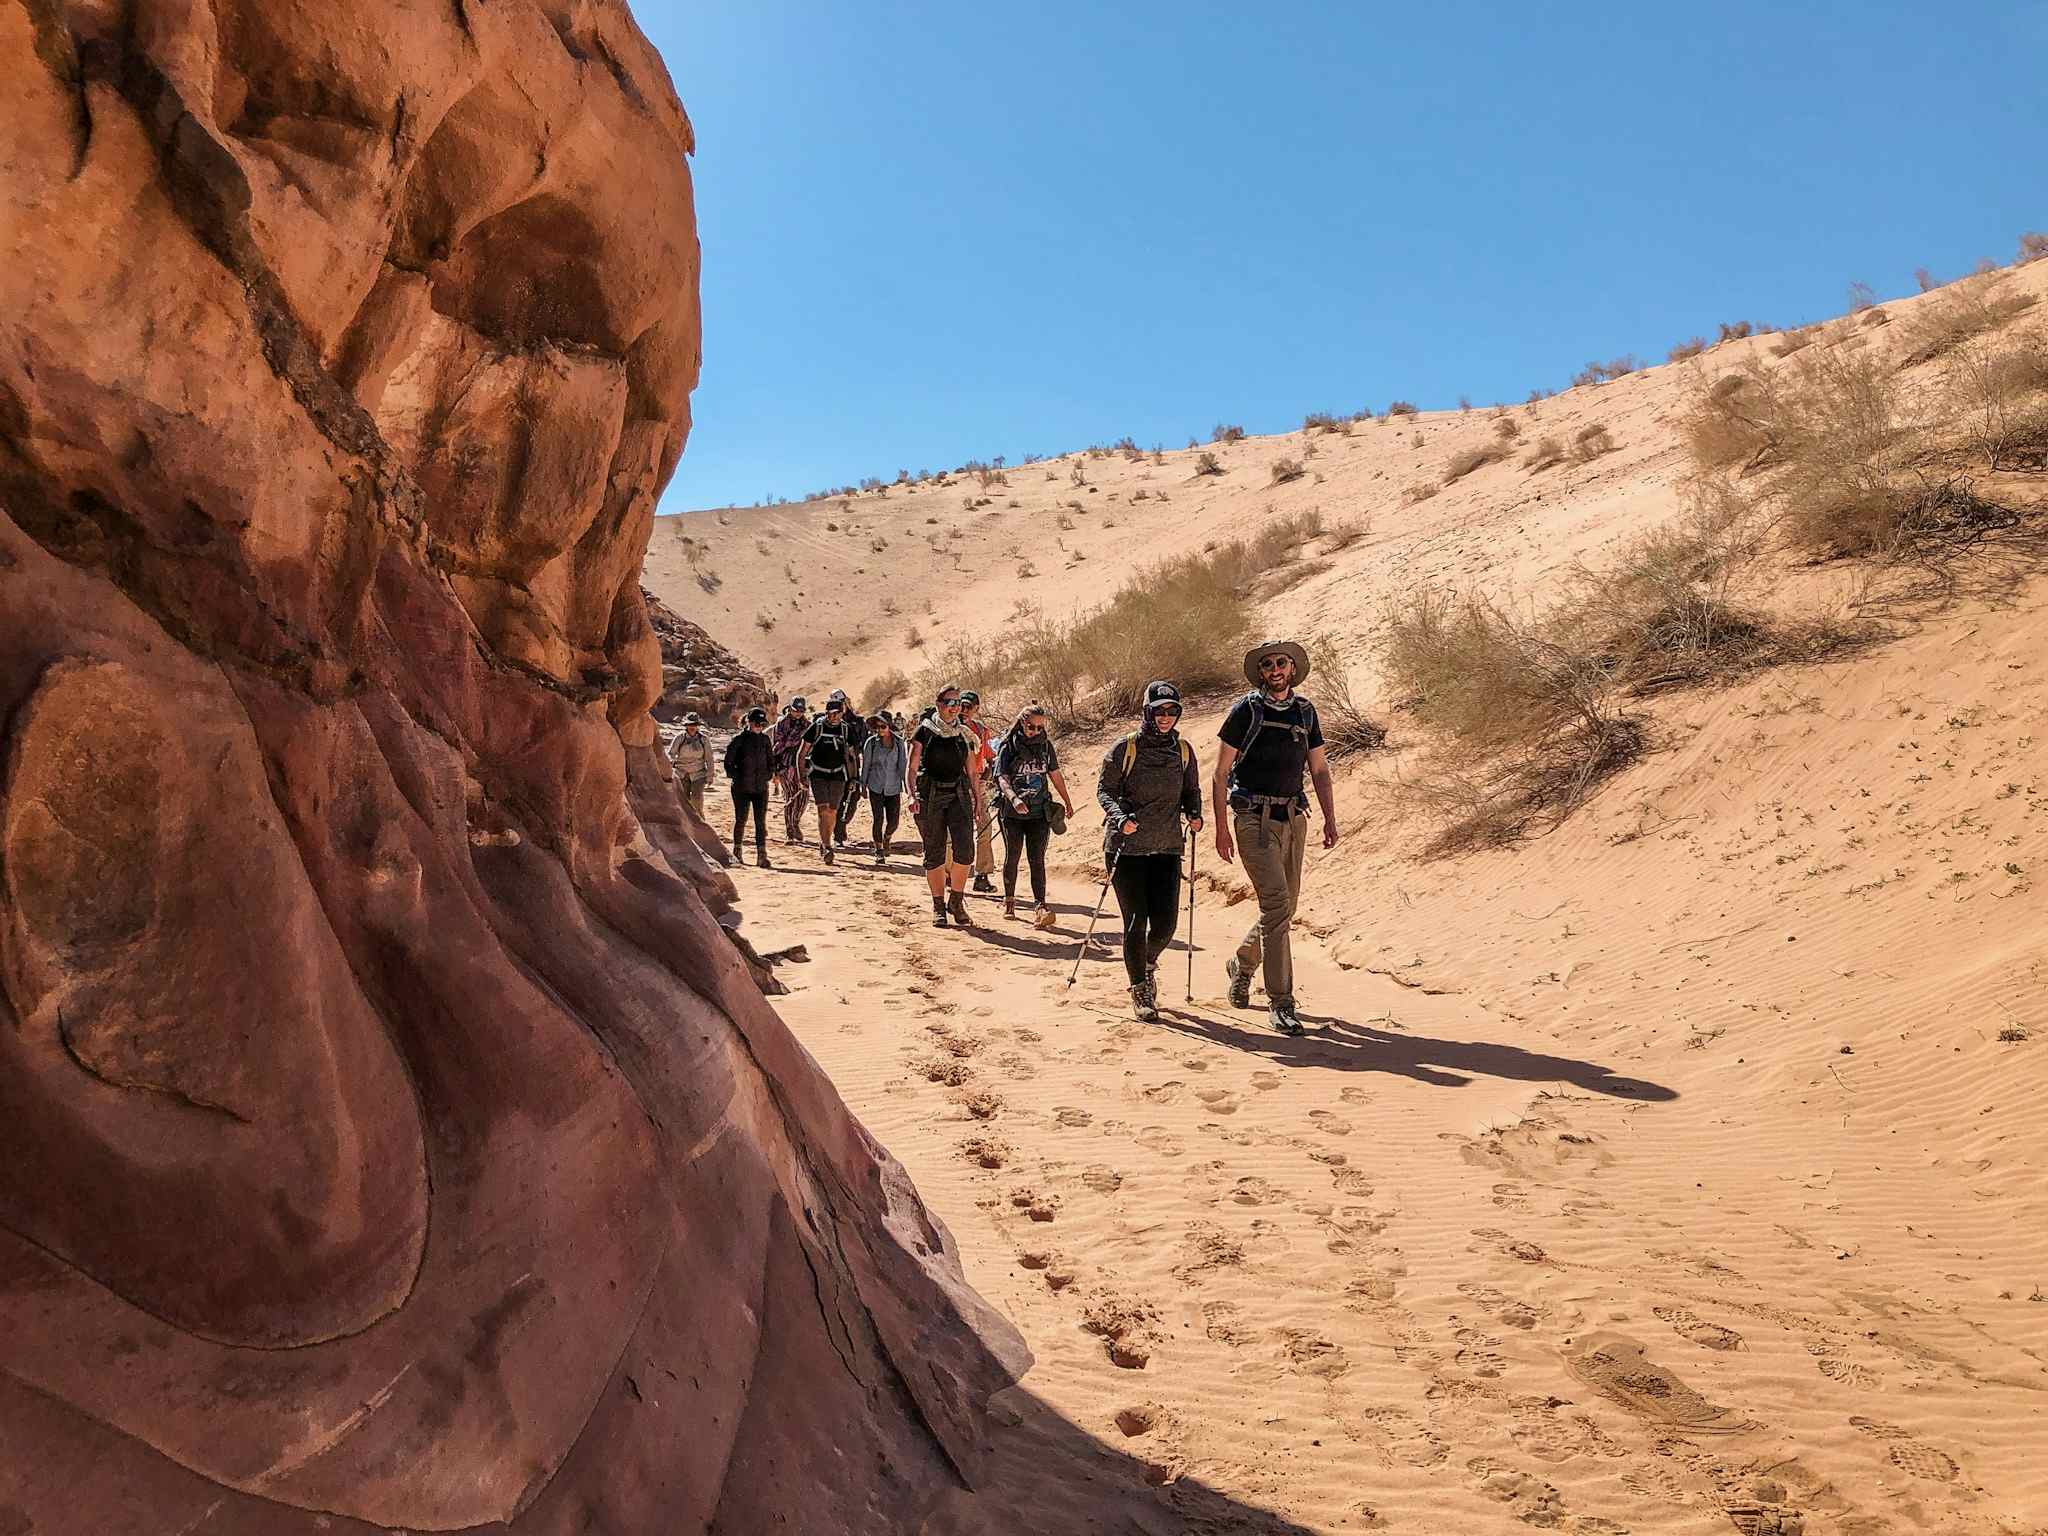 Sandy section of the Jordan Trail
Host image - Experience Jordan / The Jordan Trail